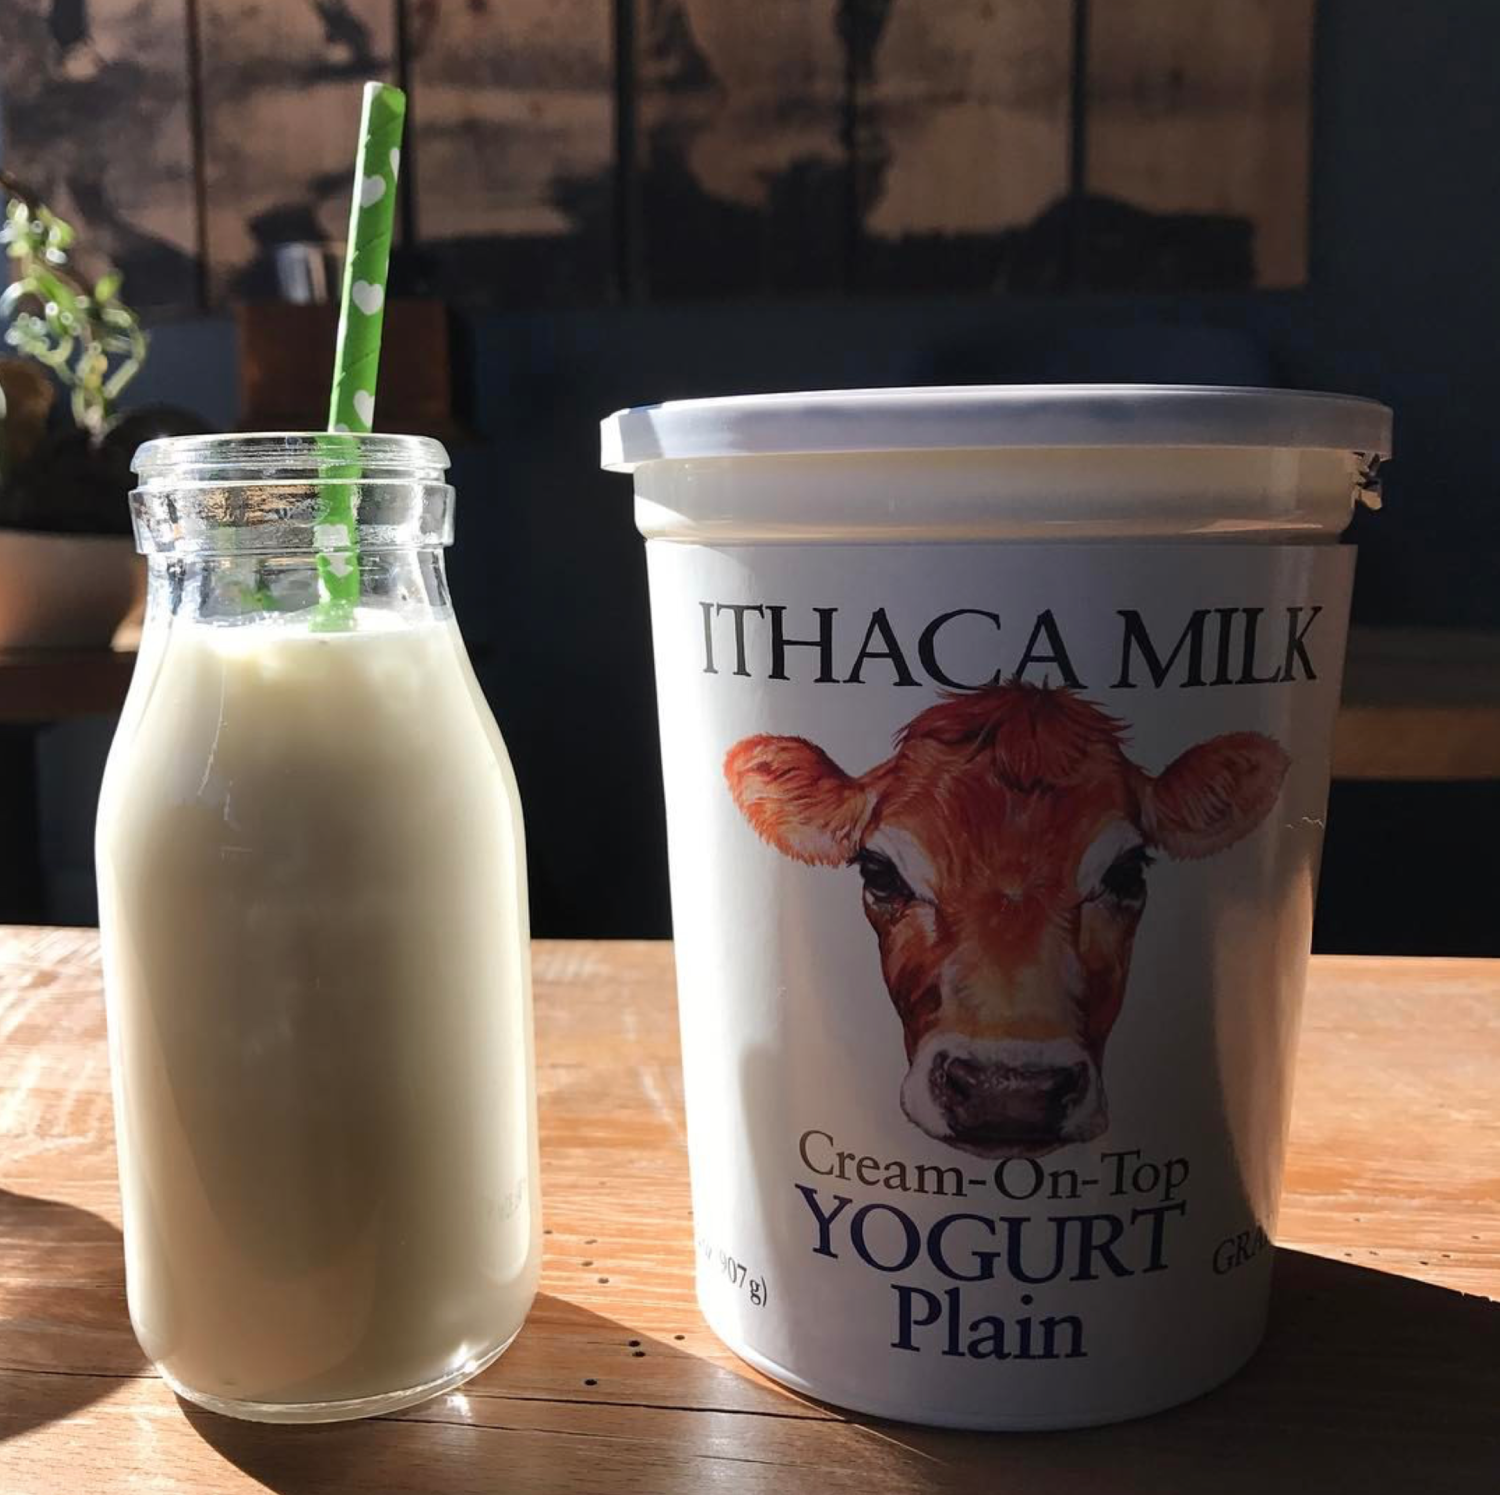 ITHACA MILK Plain Yogurt 32 oz